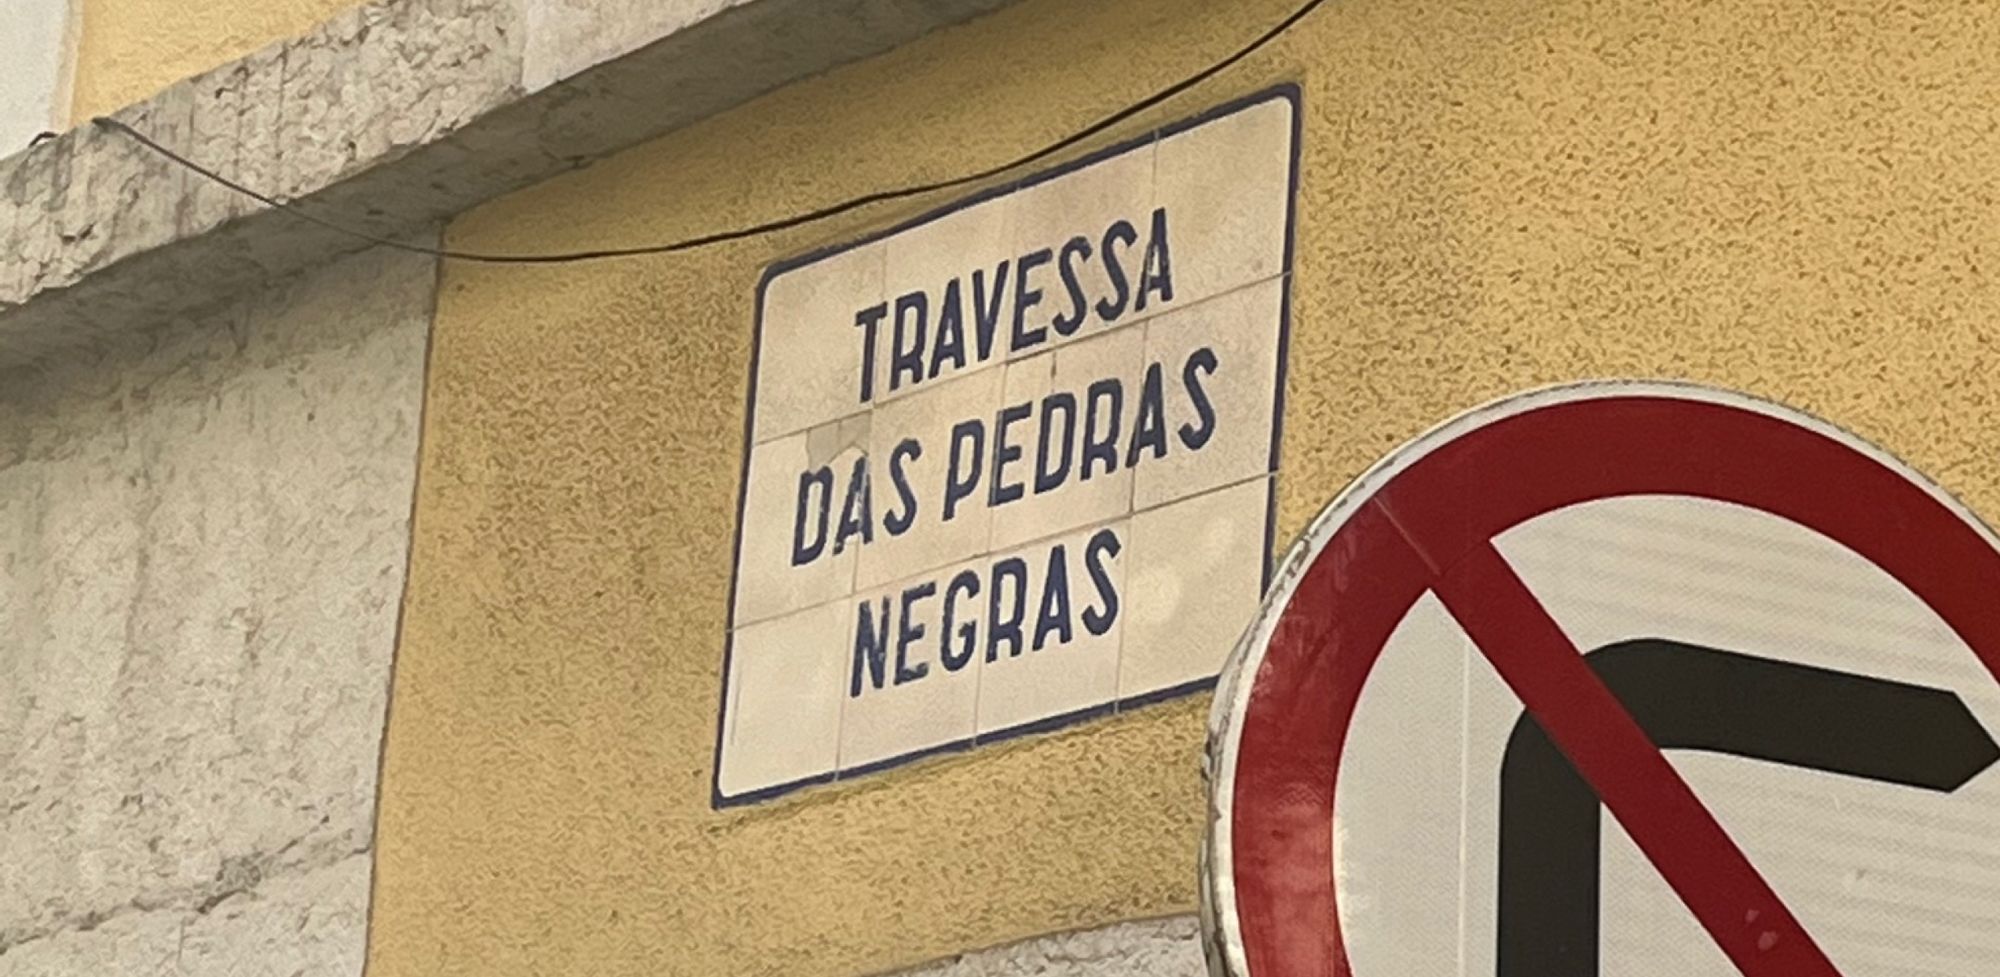 Sign indicating "Travessa das pedras negras" on exterior wall of Lisbon building